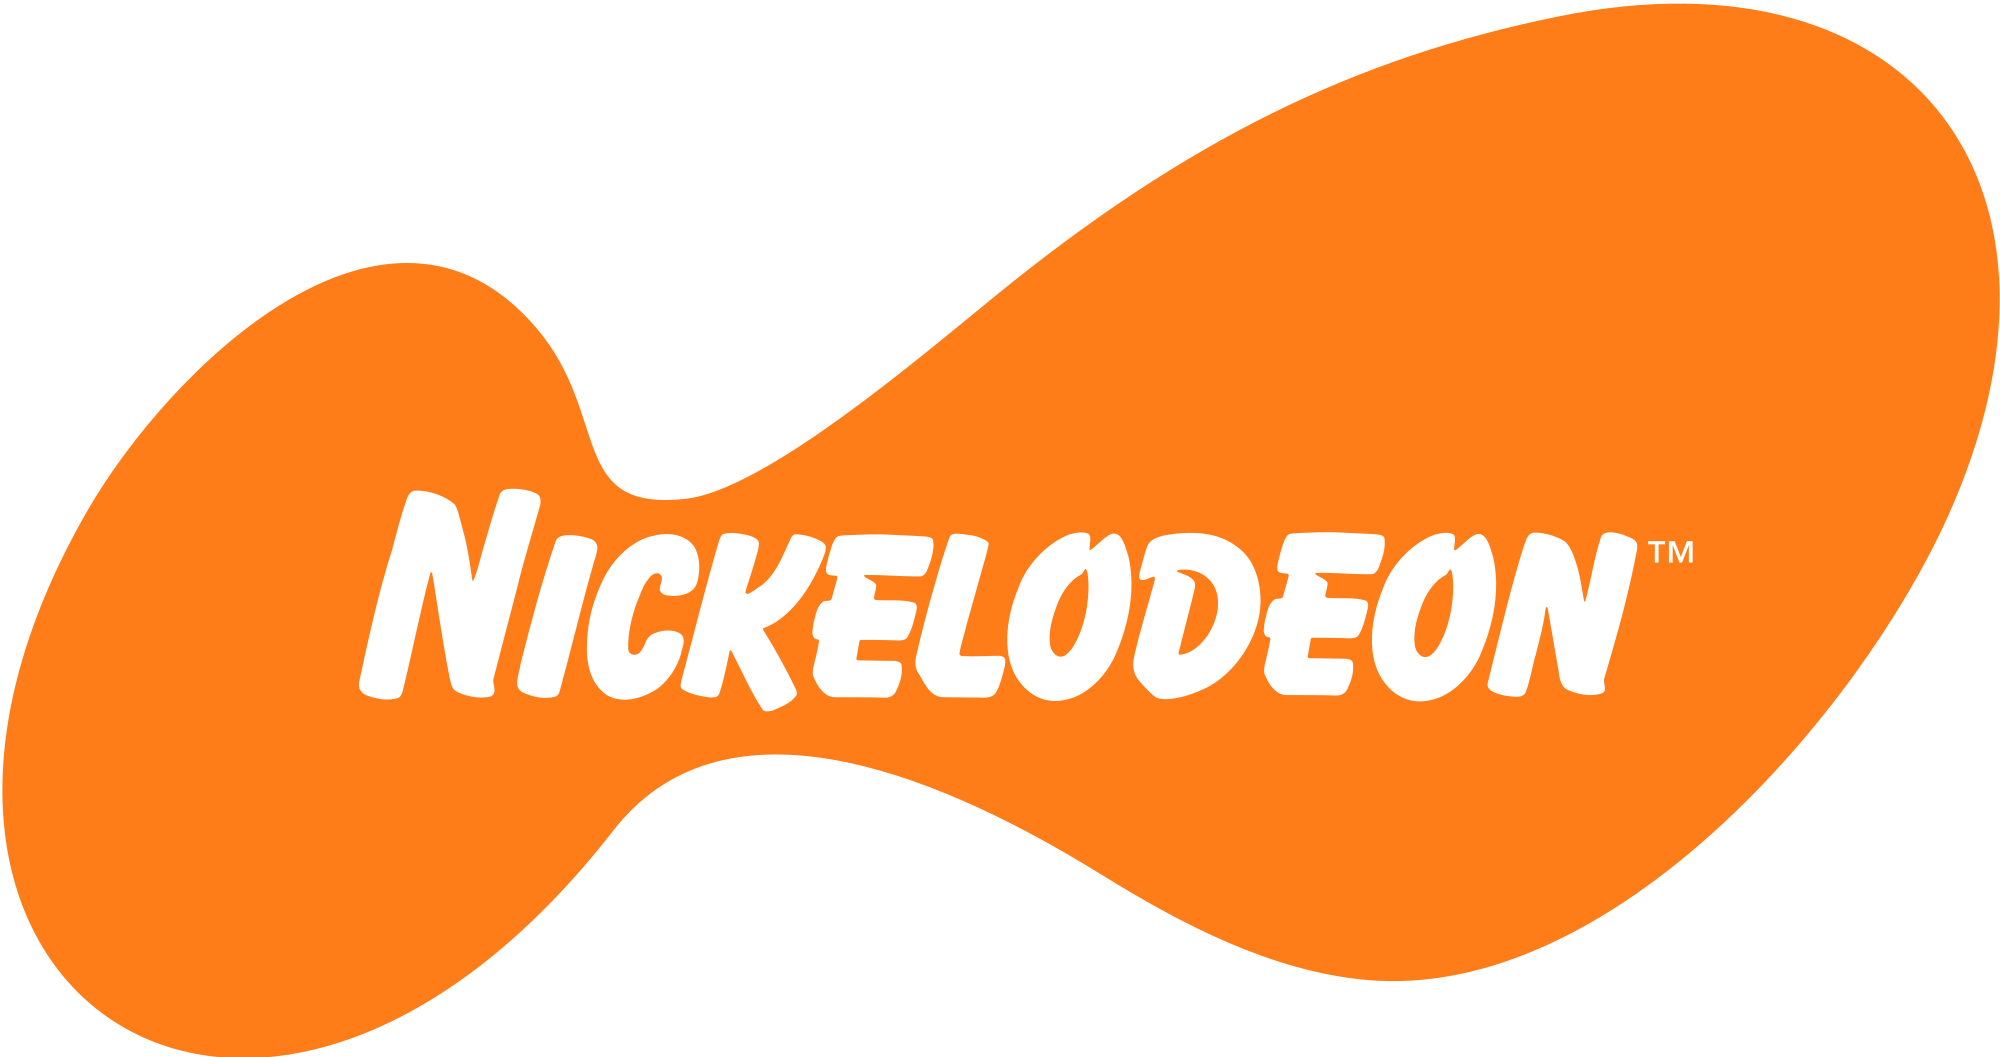 Old Nickelodeon Logo - File:Nickelodeon old logo.svg - Wikimedia Commons